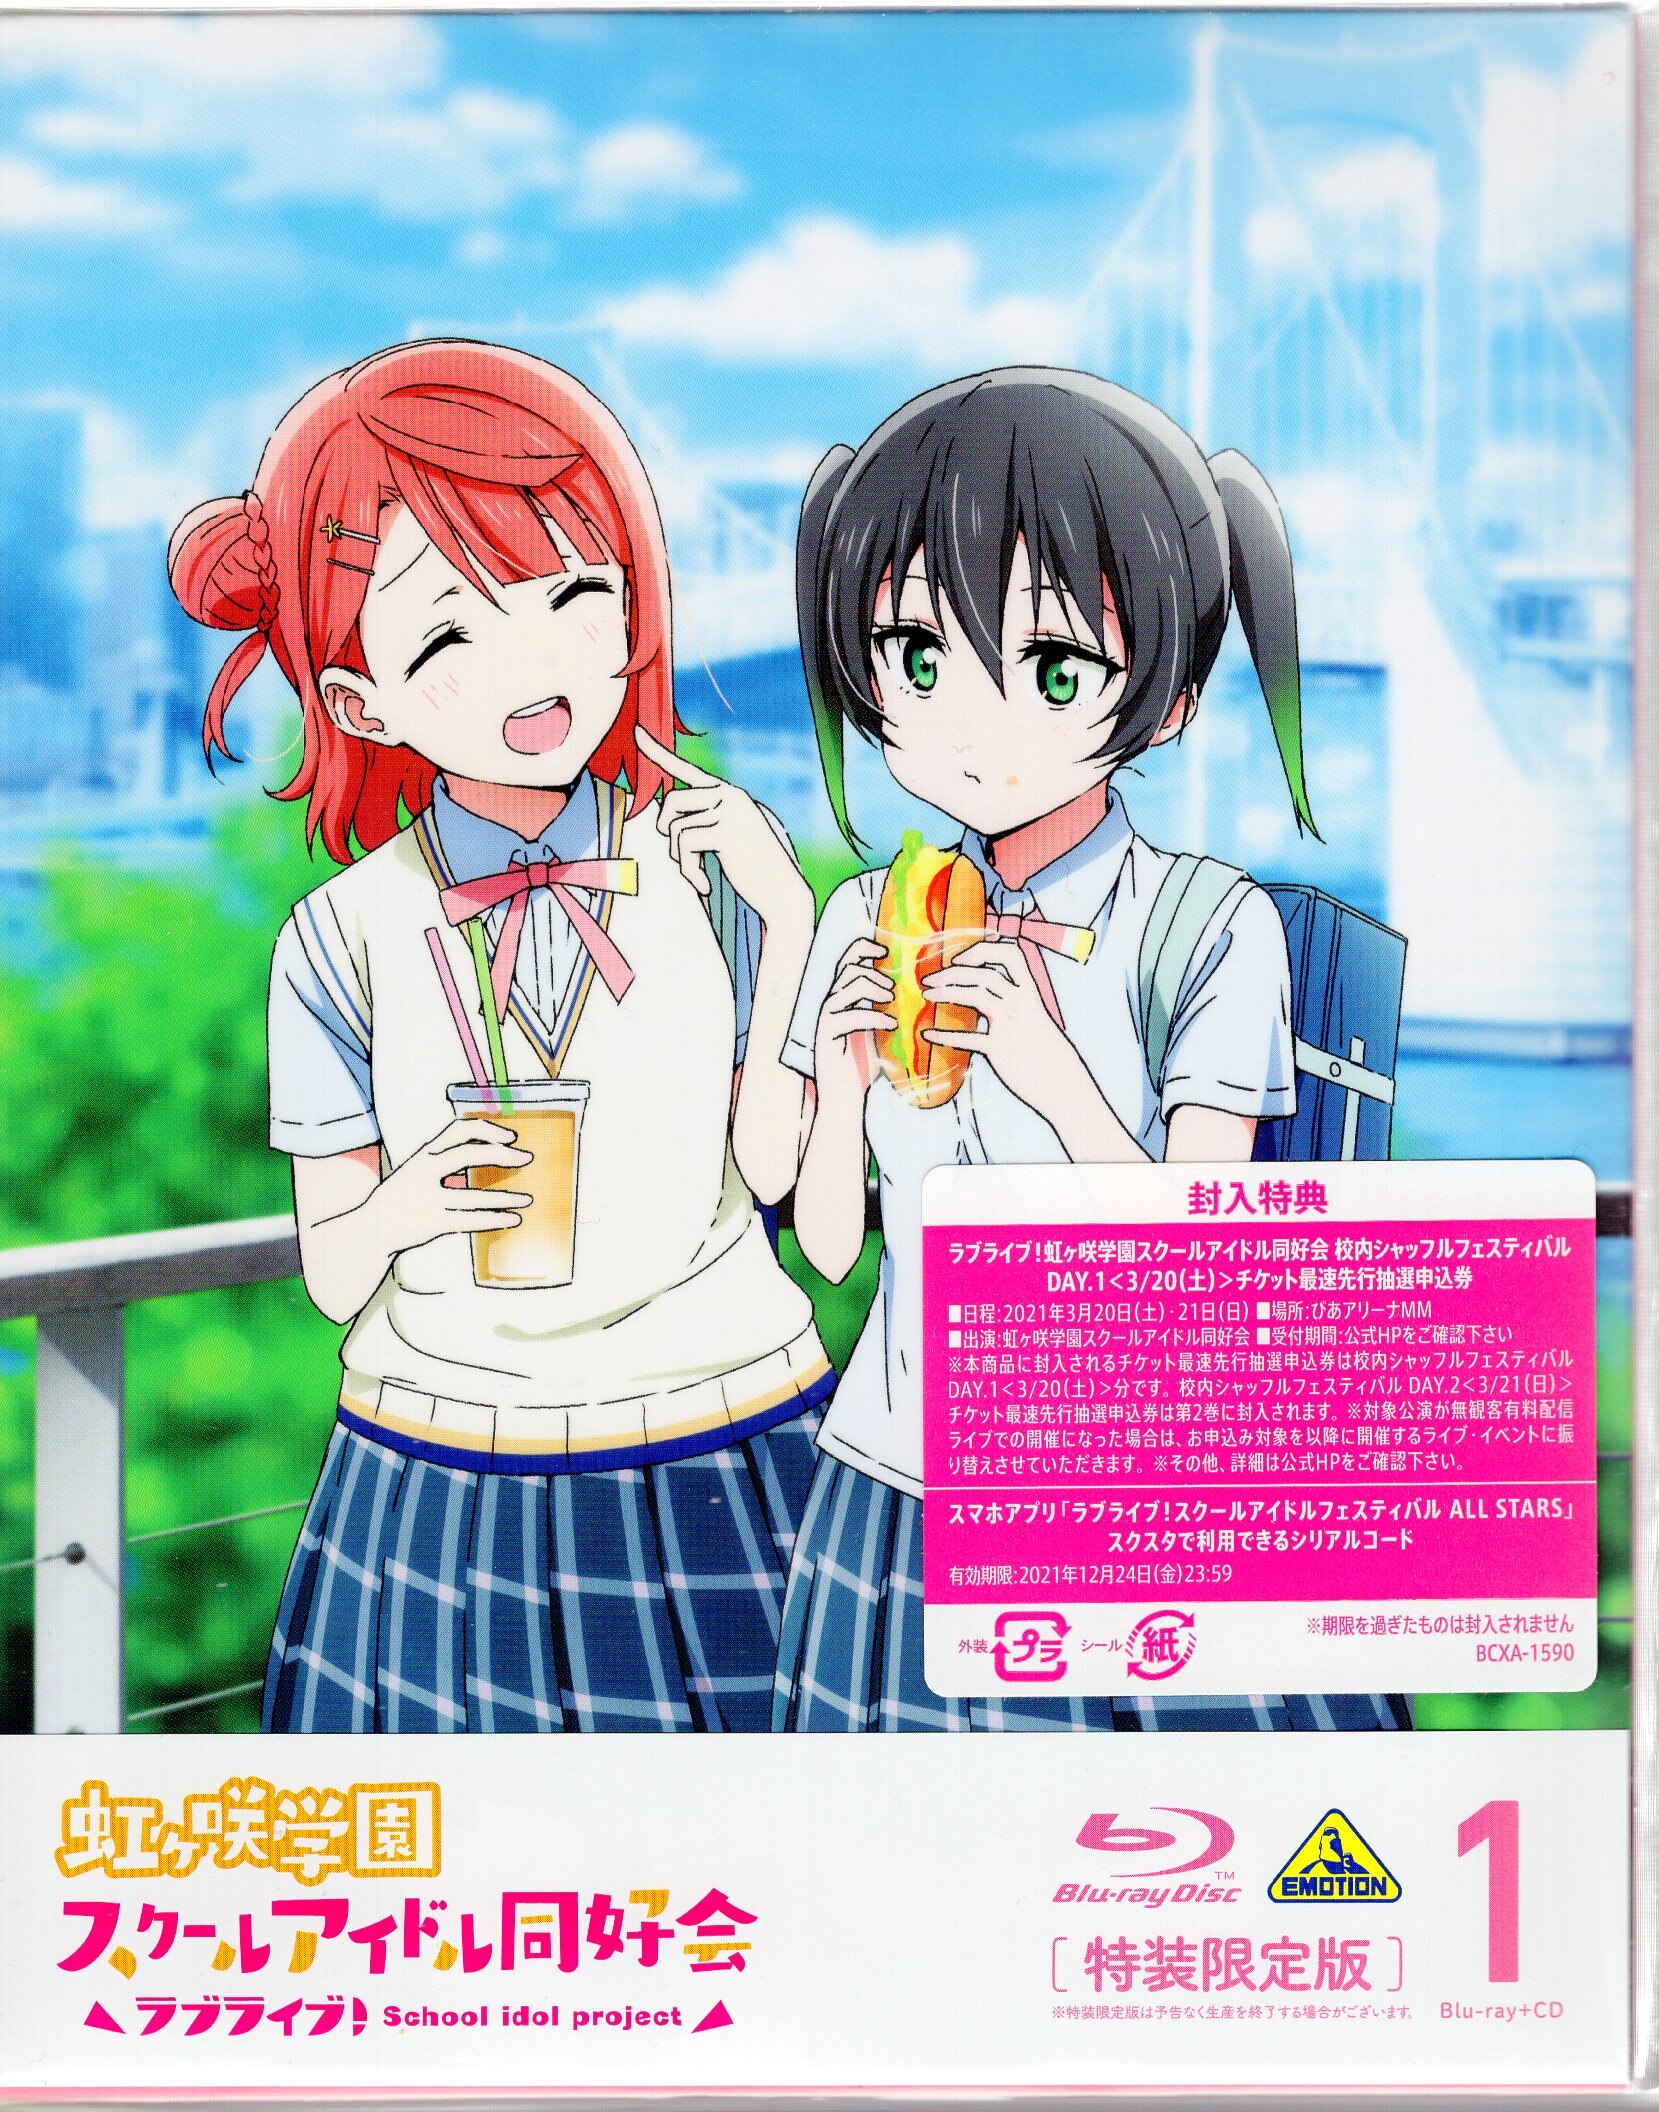 Bandai Namco Arts Anime Blu Ray With A Student Id Card Love Live Nijigasaki High School School Idle Club Special Equipment Limited Edition 1 Mandarake Online Shop